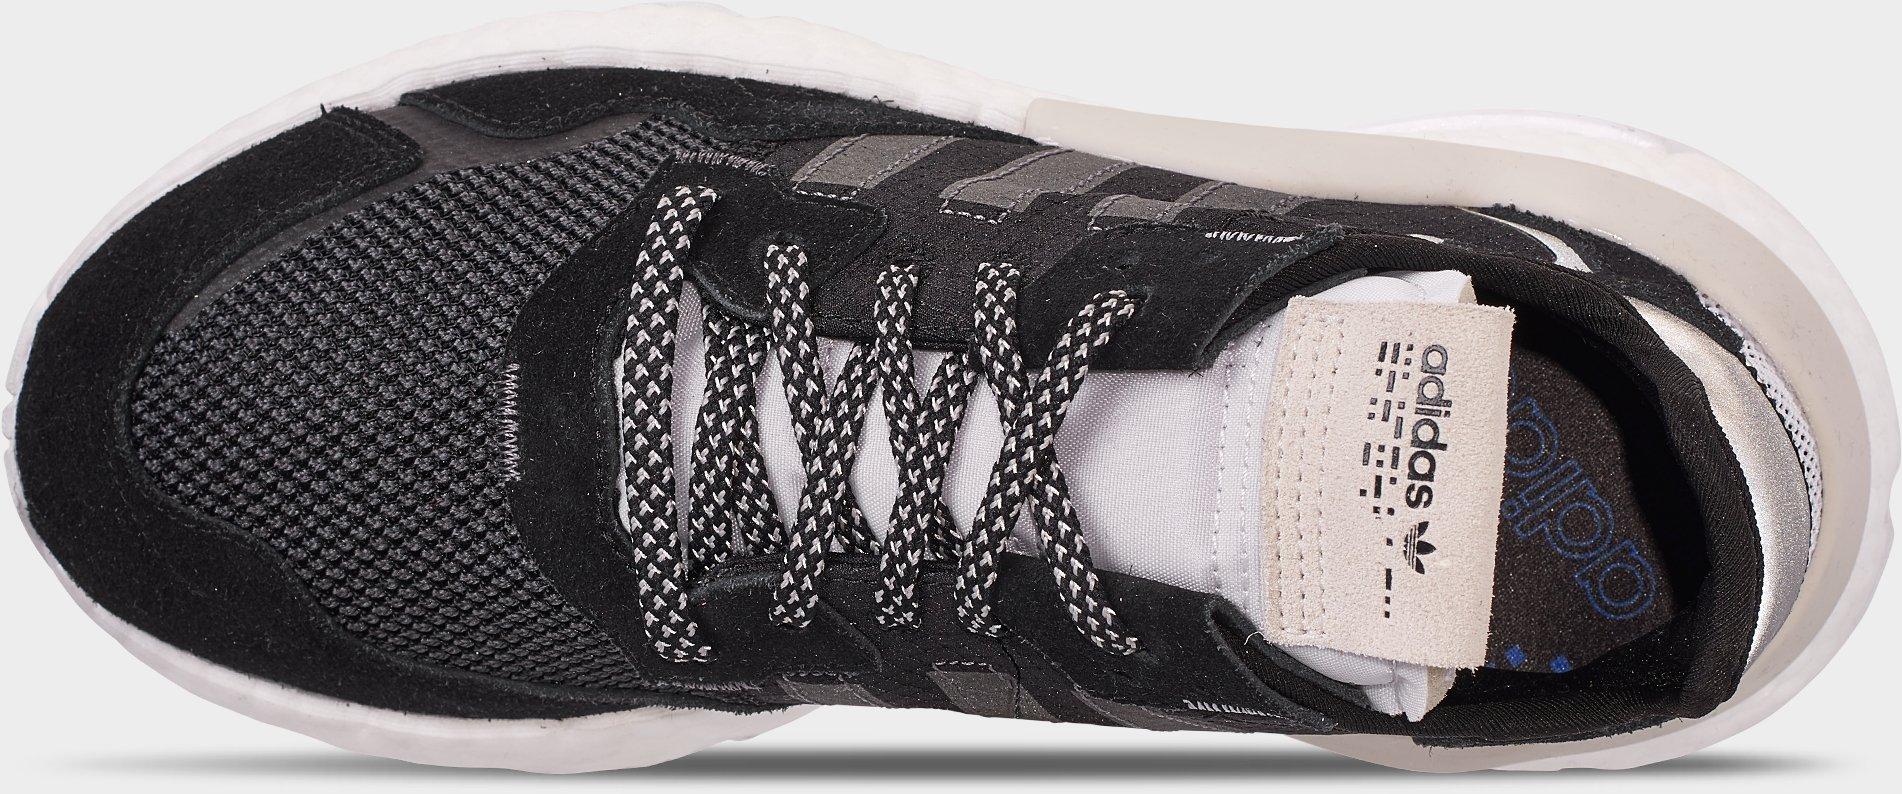 adidas originals nite jogger casual shoes